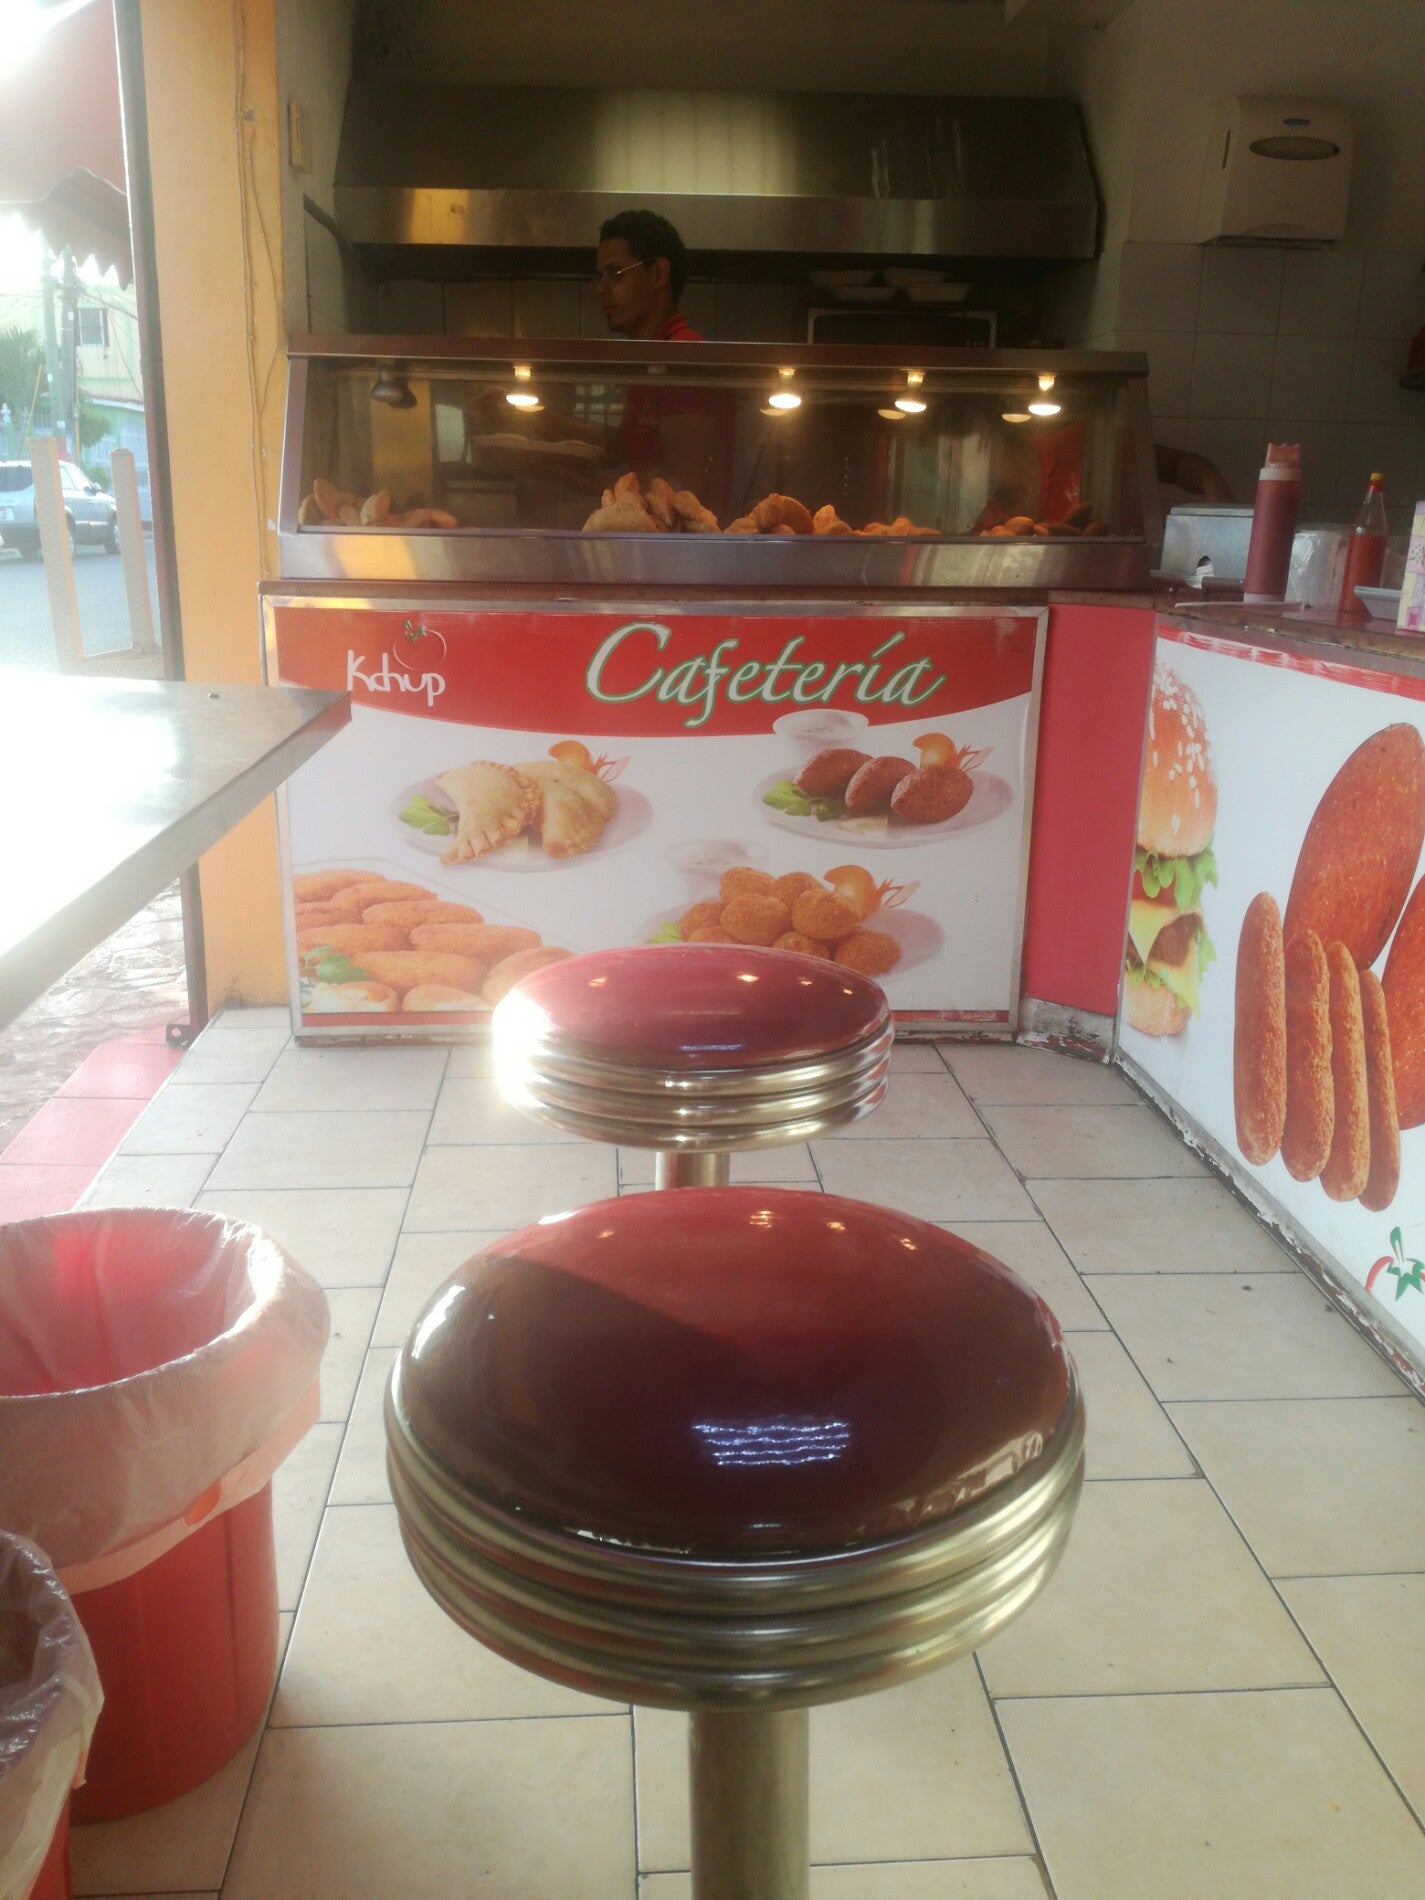 Cafeteria kchup